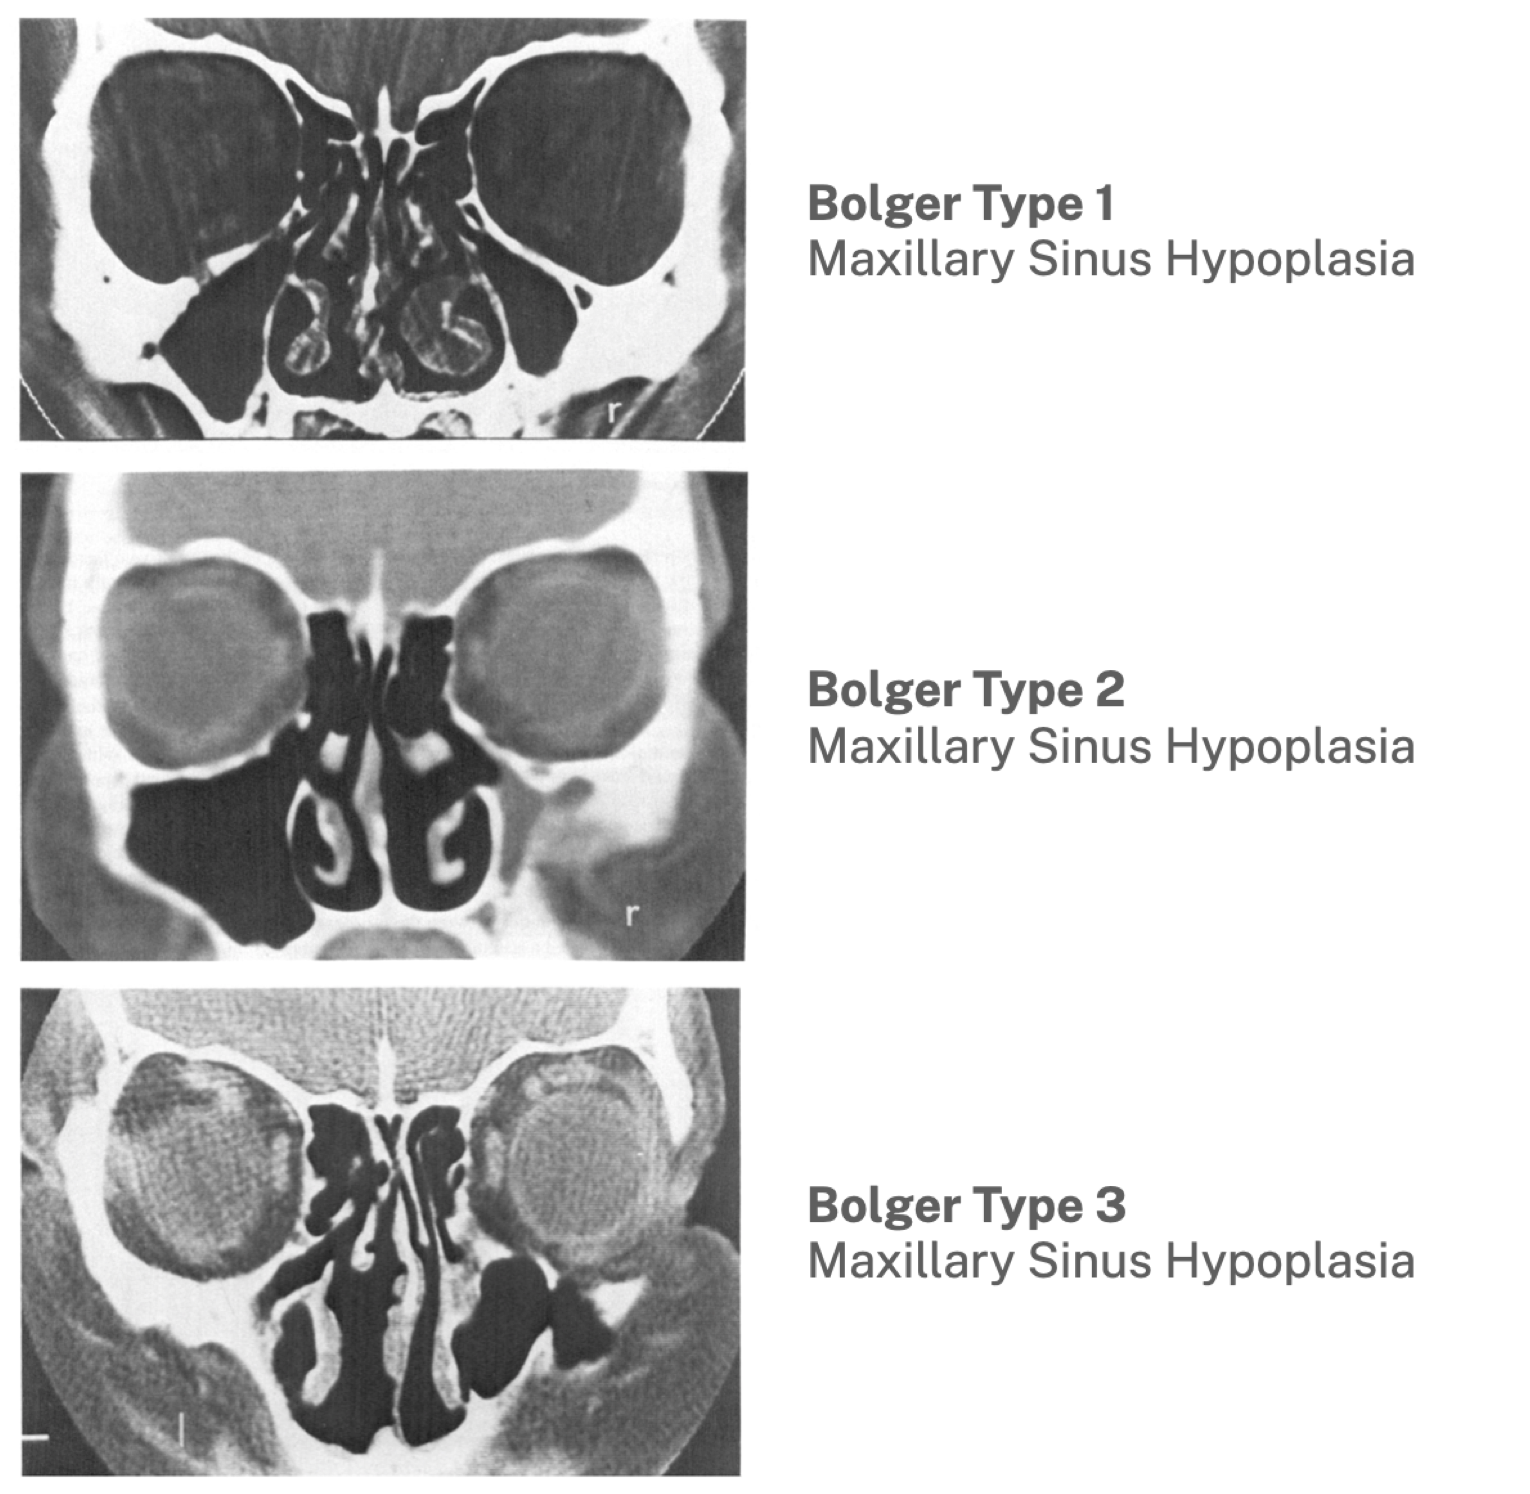 Bolger Classification of Maxillary Sinus Hypoplasia